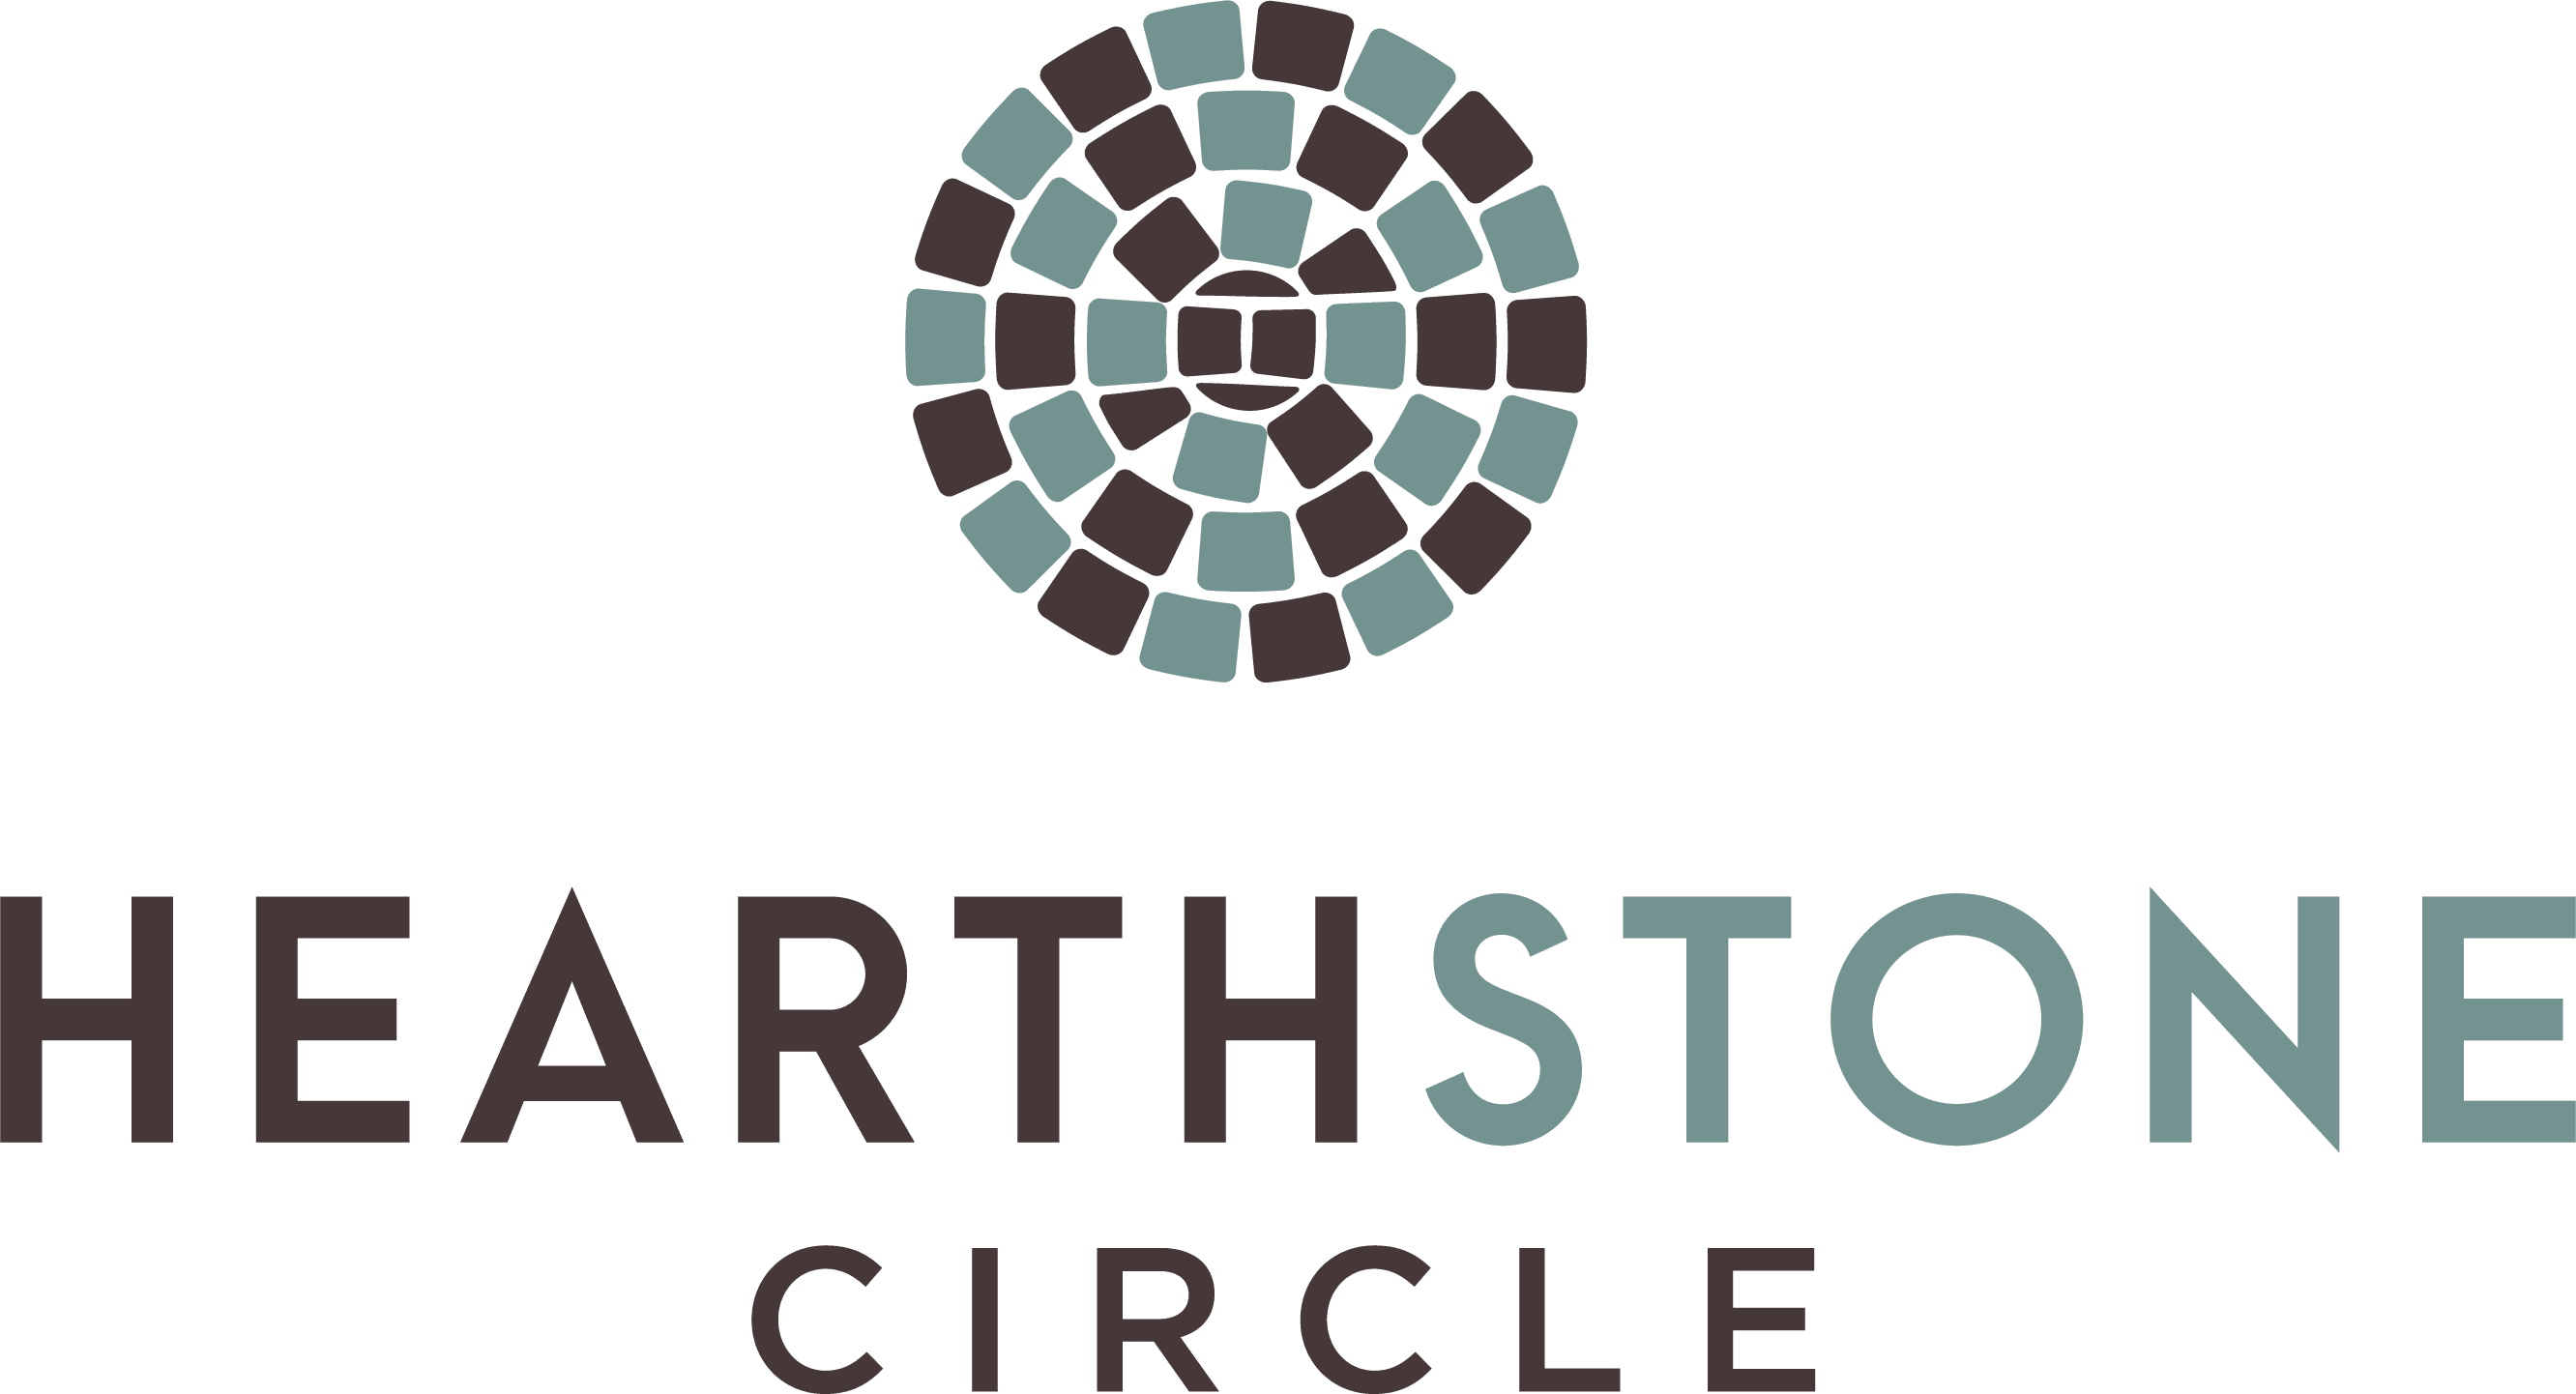 Hearthstone Circle